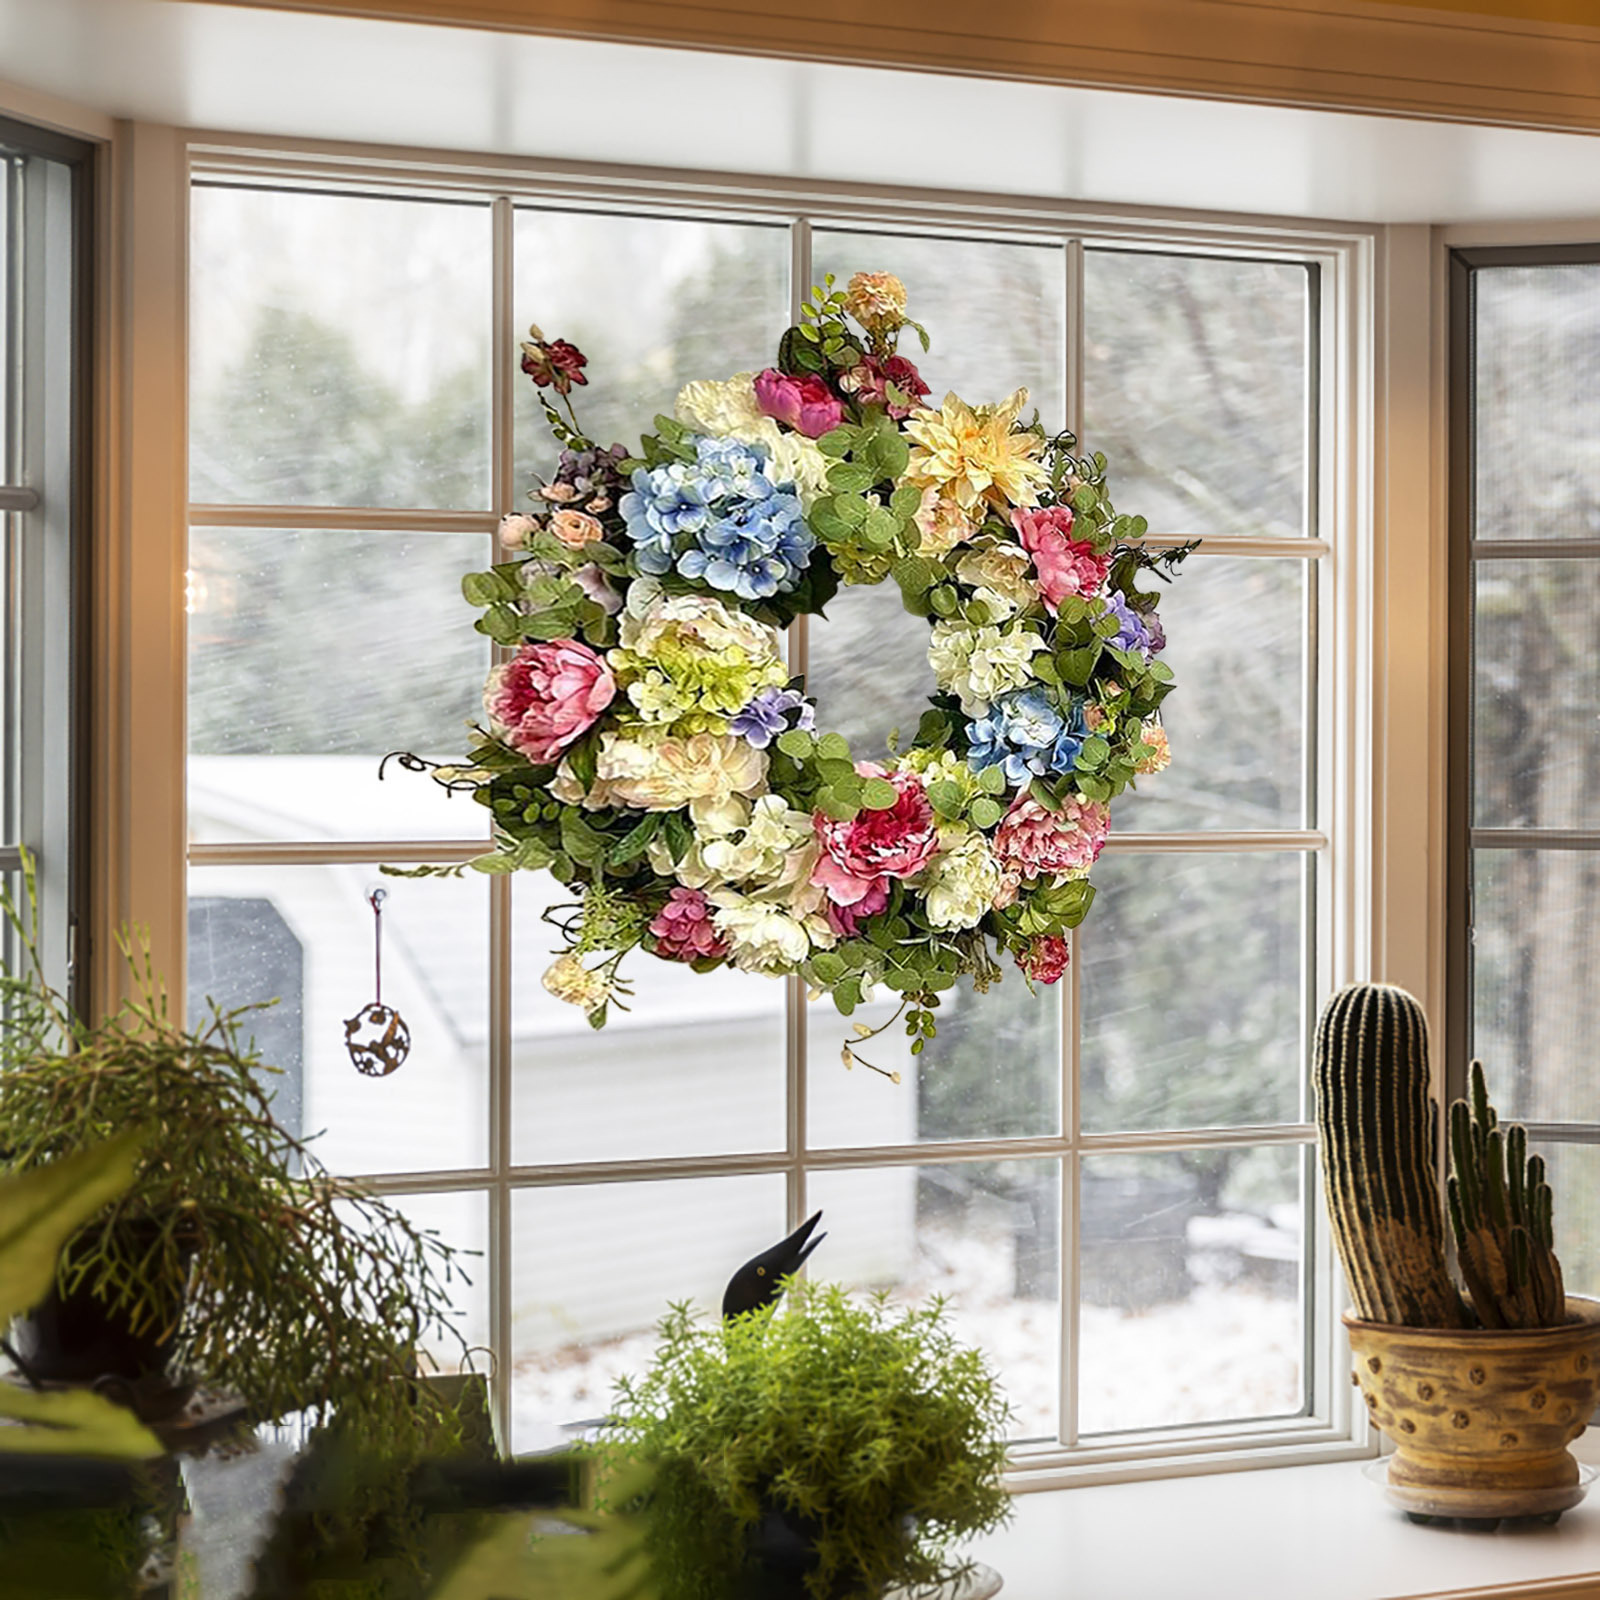 [Early spring sale]💞Rainbow Hydrangea Wreath